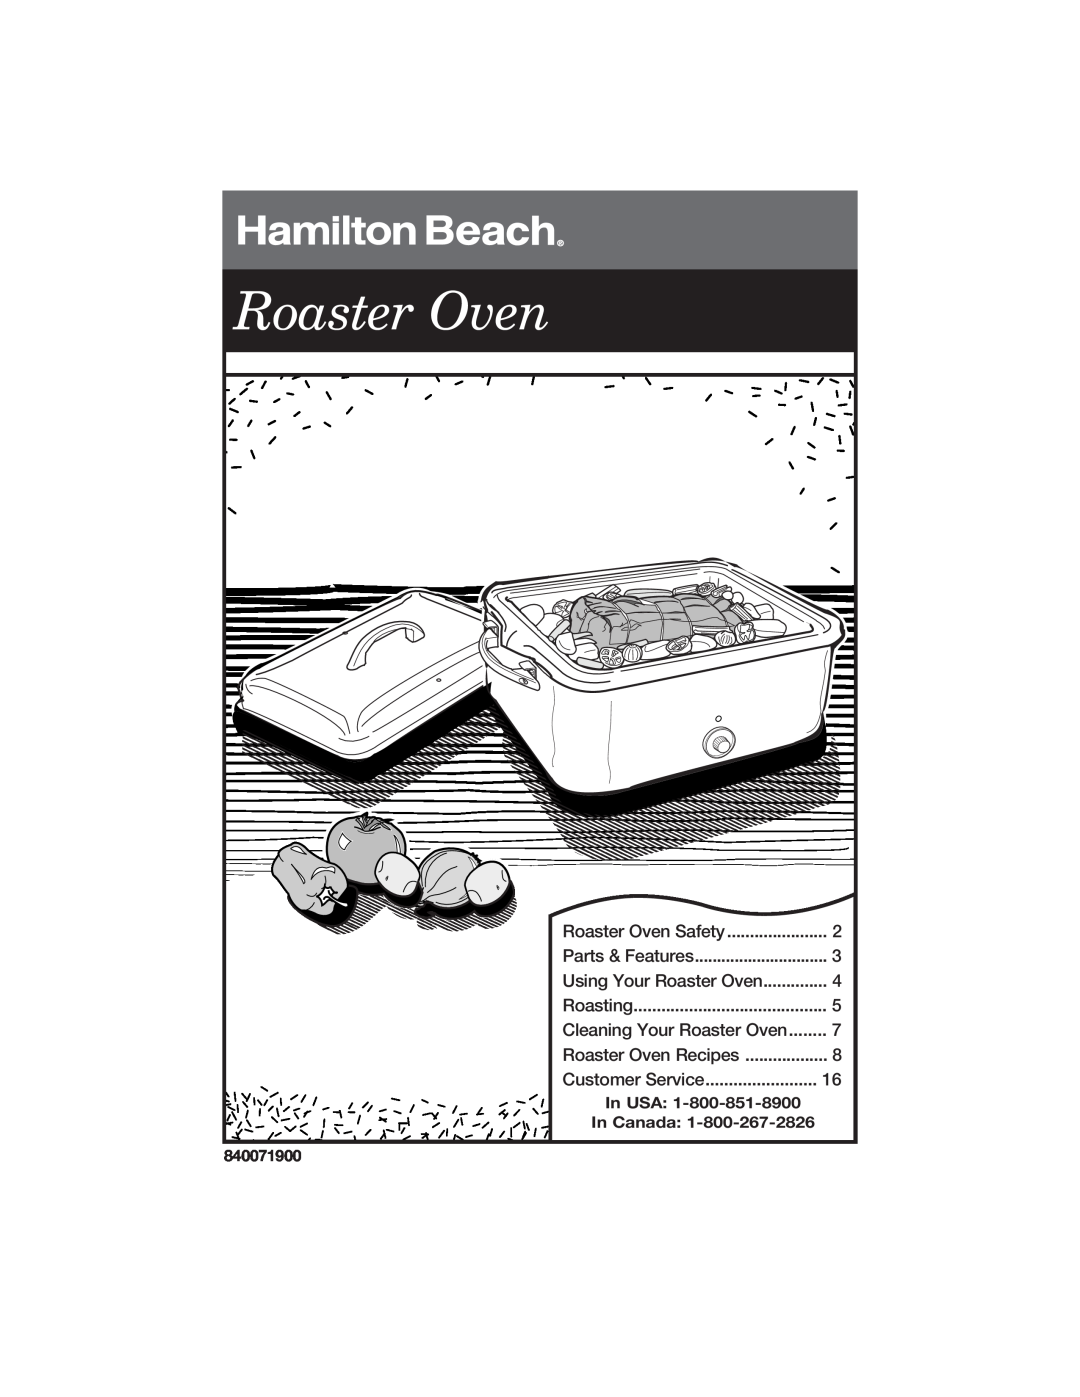 Hamilton Beach manual Roaster Oven Safety, Parts & Features, Using Your Roaster Oven, Roaster Oven Recipes, In USA 